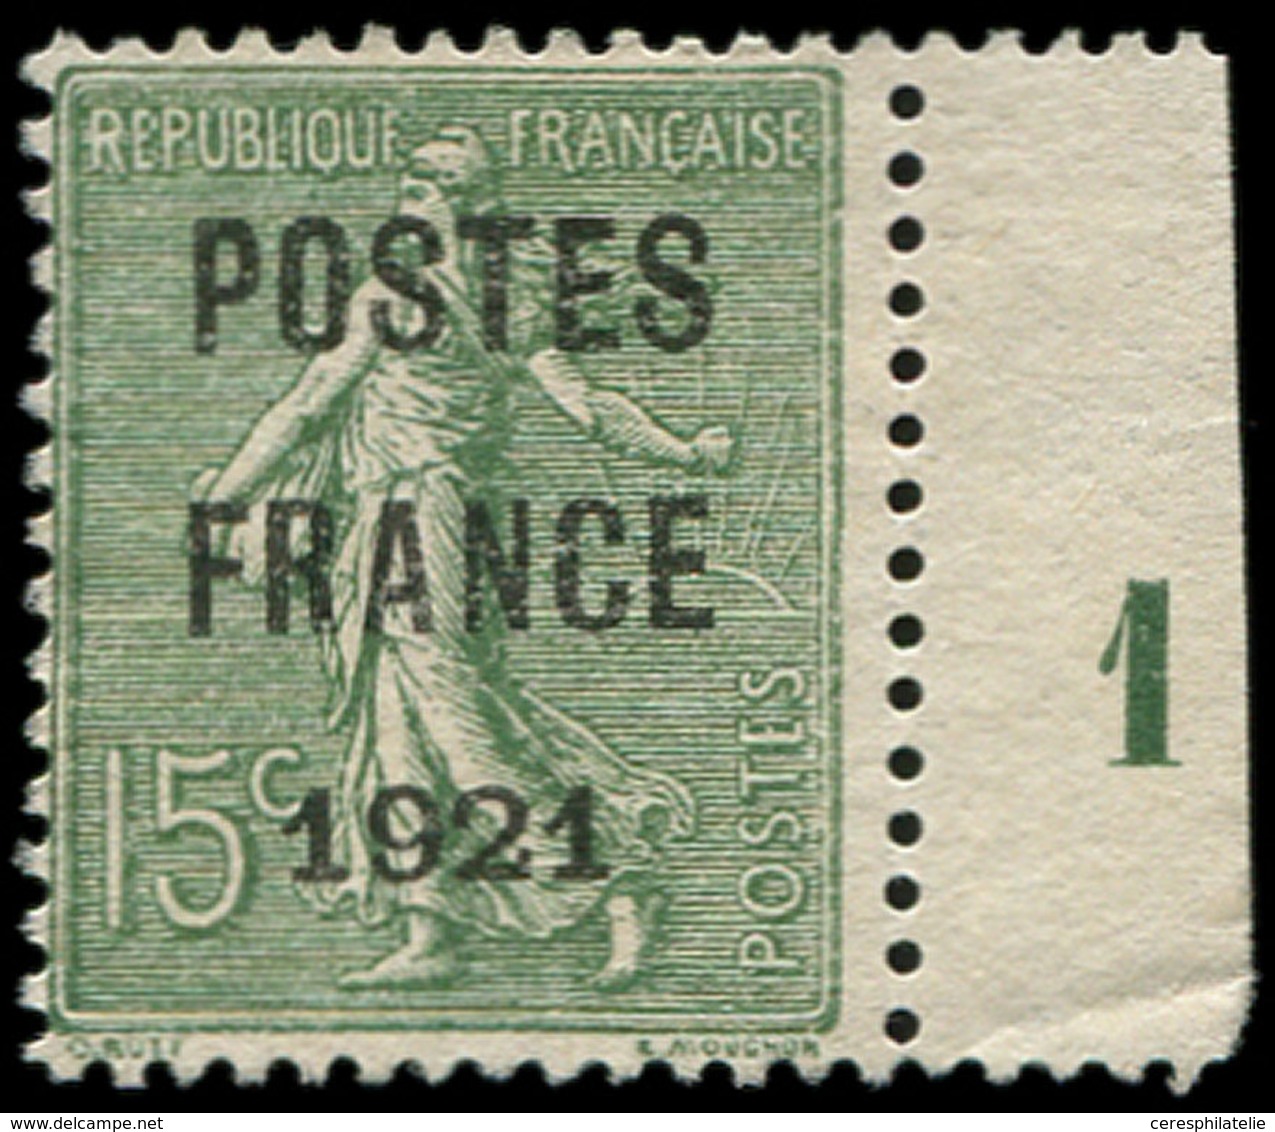 (*) PREOBLITERES - 34  15c. Vert-olive, POSTES FRANCE 1921, Bdf Mill.1 (partiel), TB, Certif. P. Scheller - 1893-1947